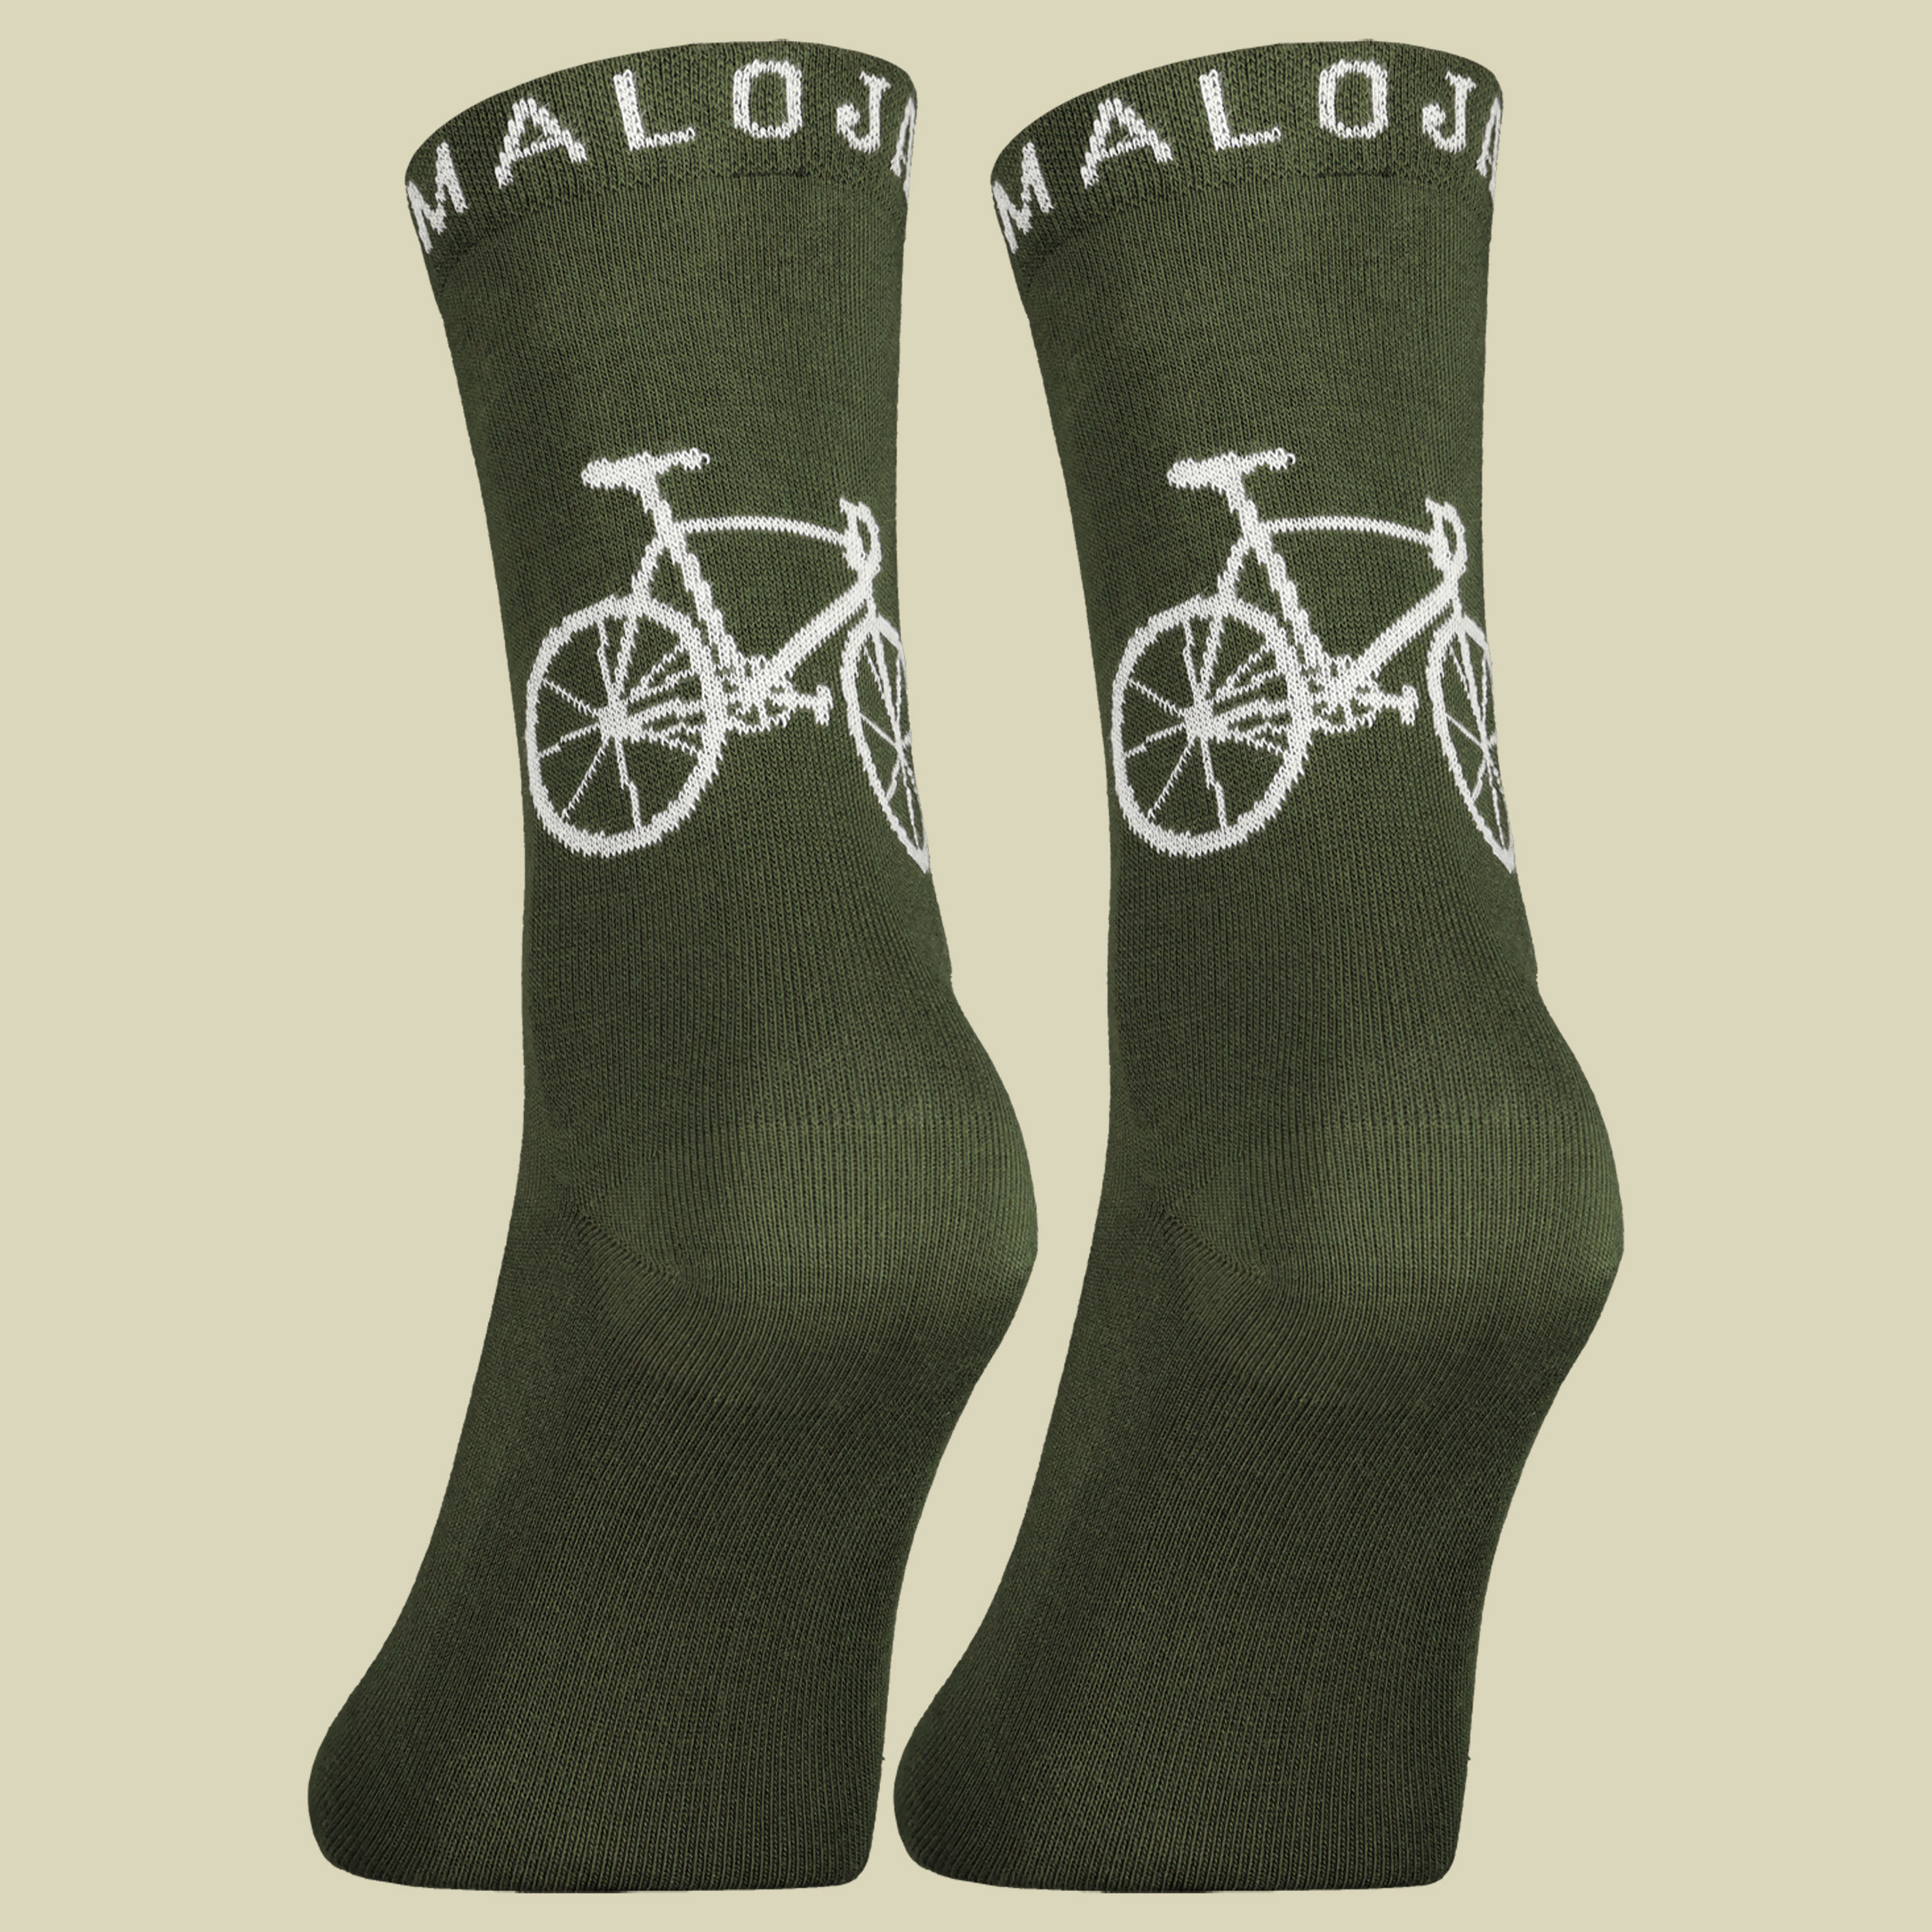 StalkM. Socks Größe 39-42 Farbe fir